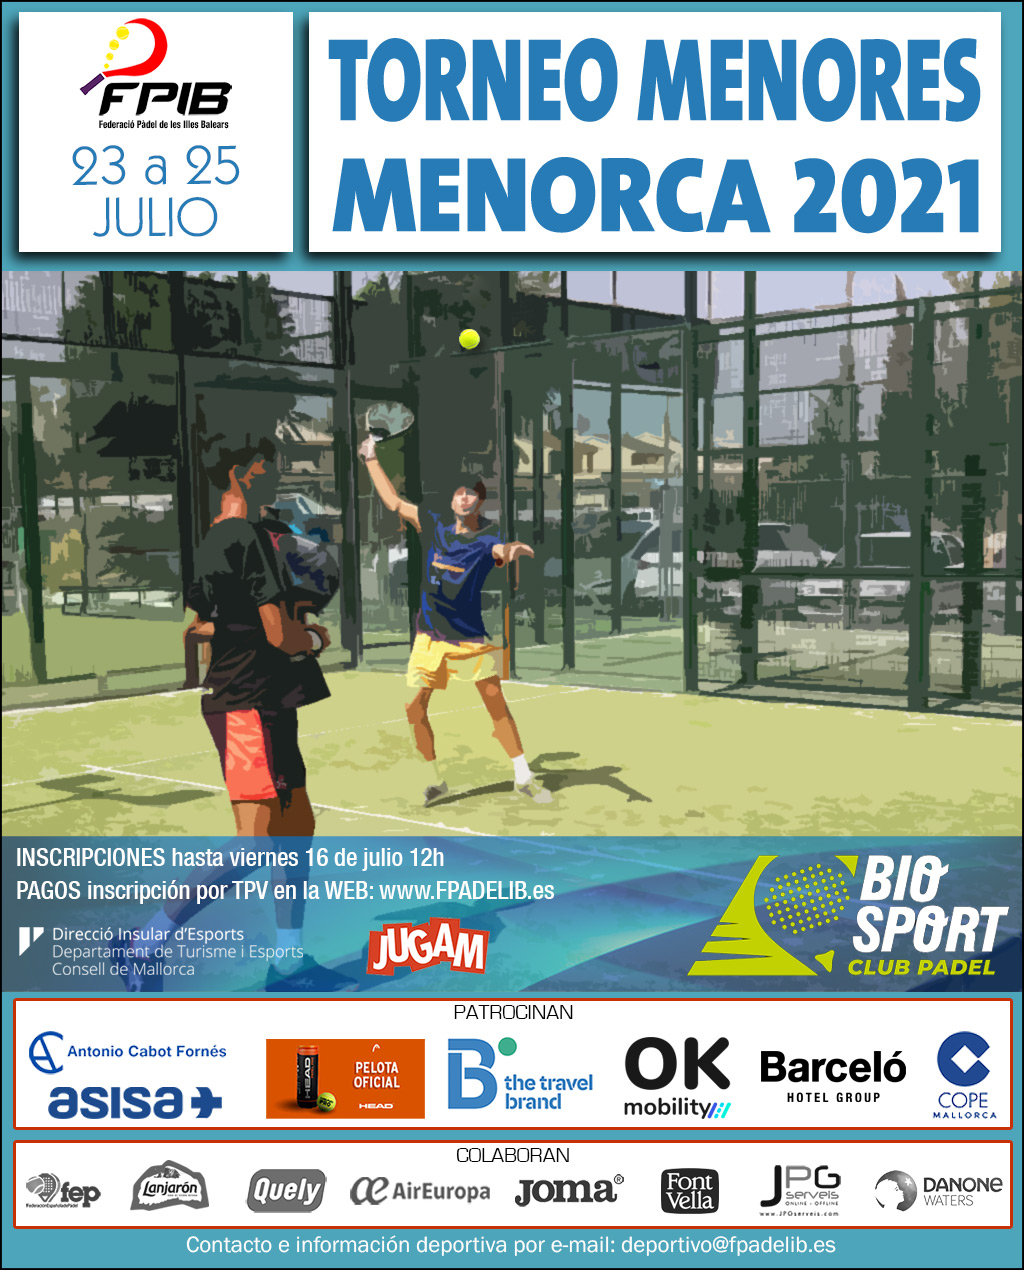 Torneo Menores Menorca 2021